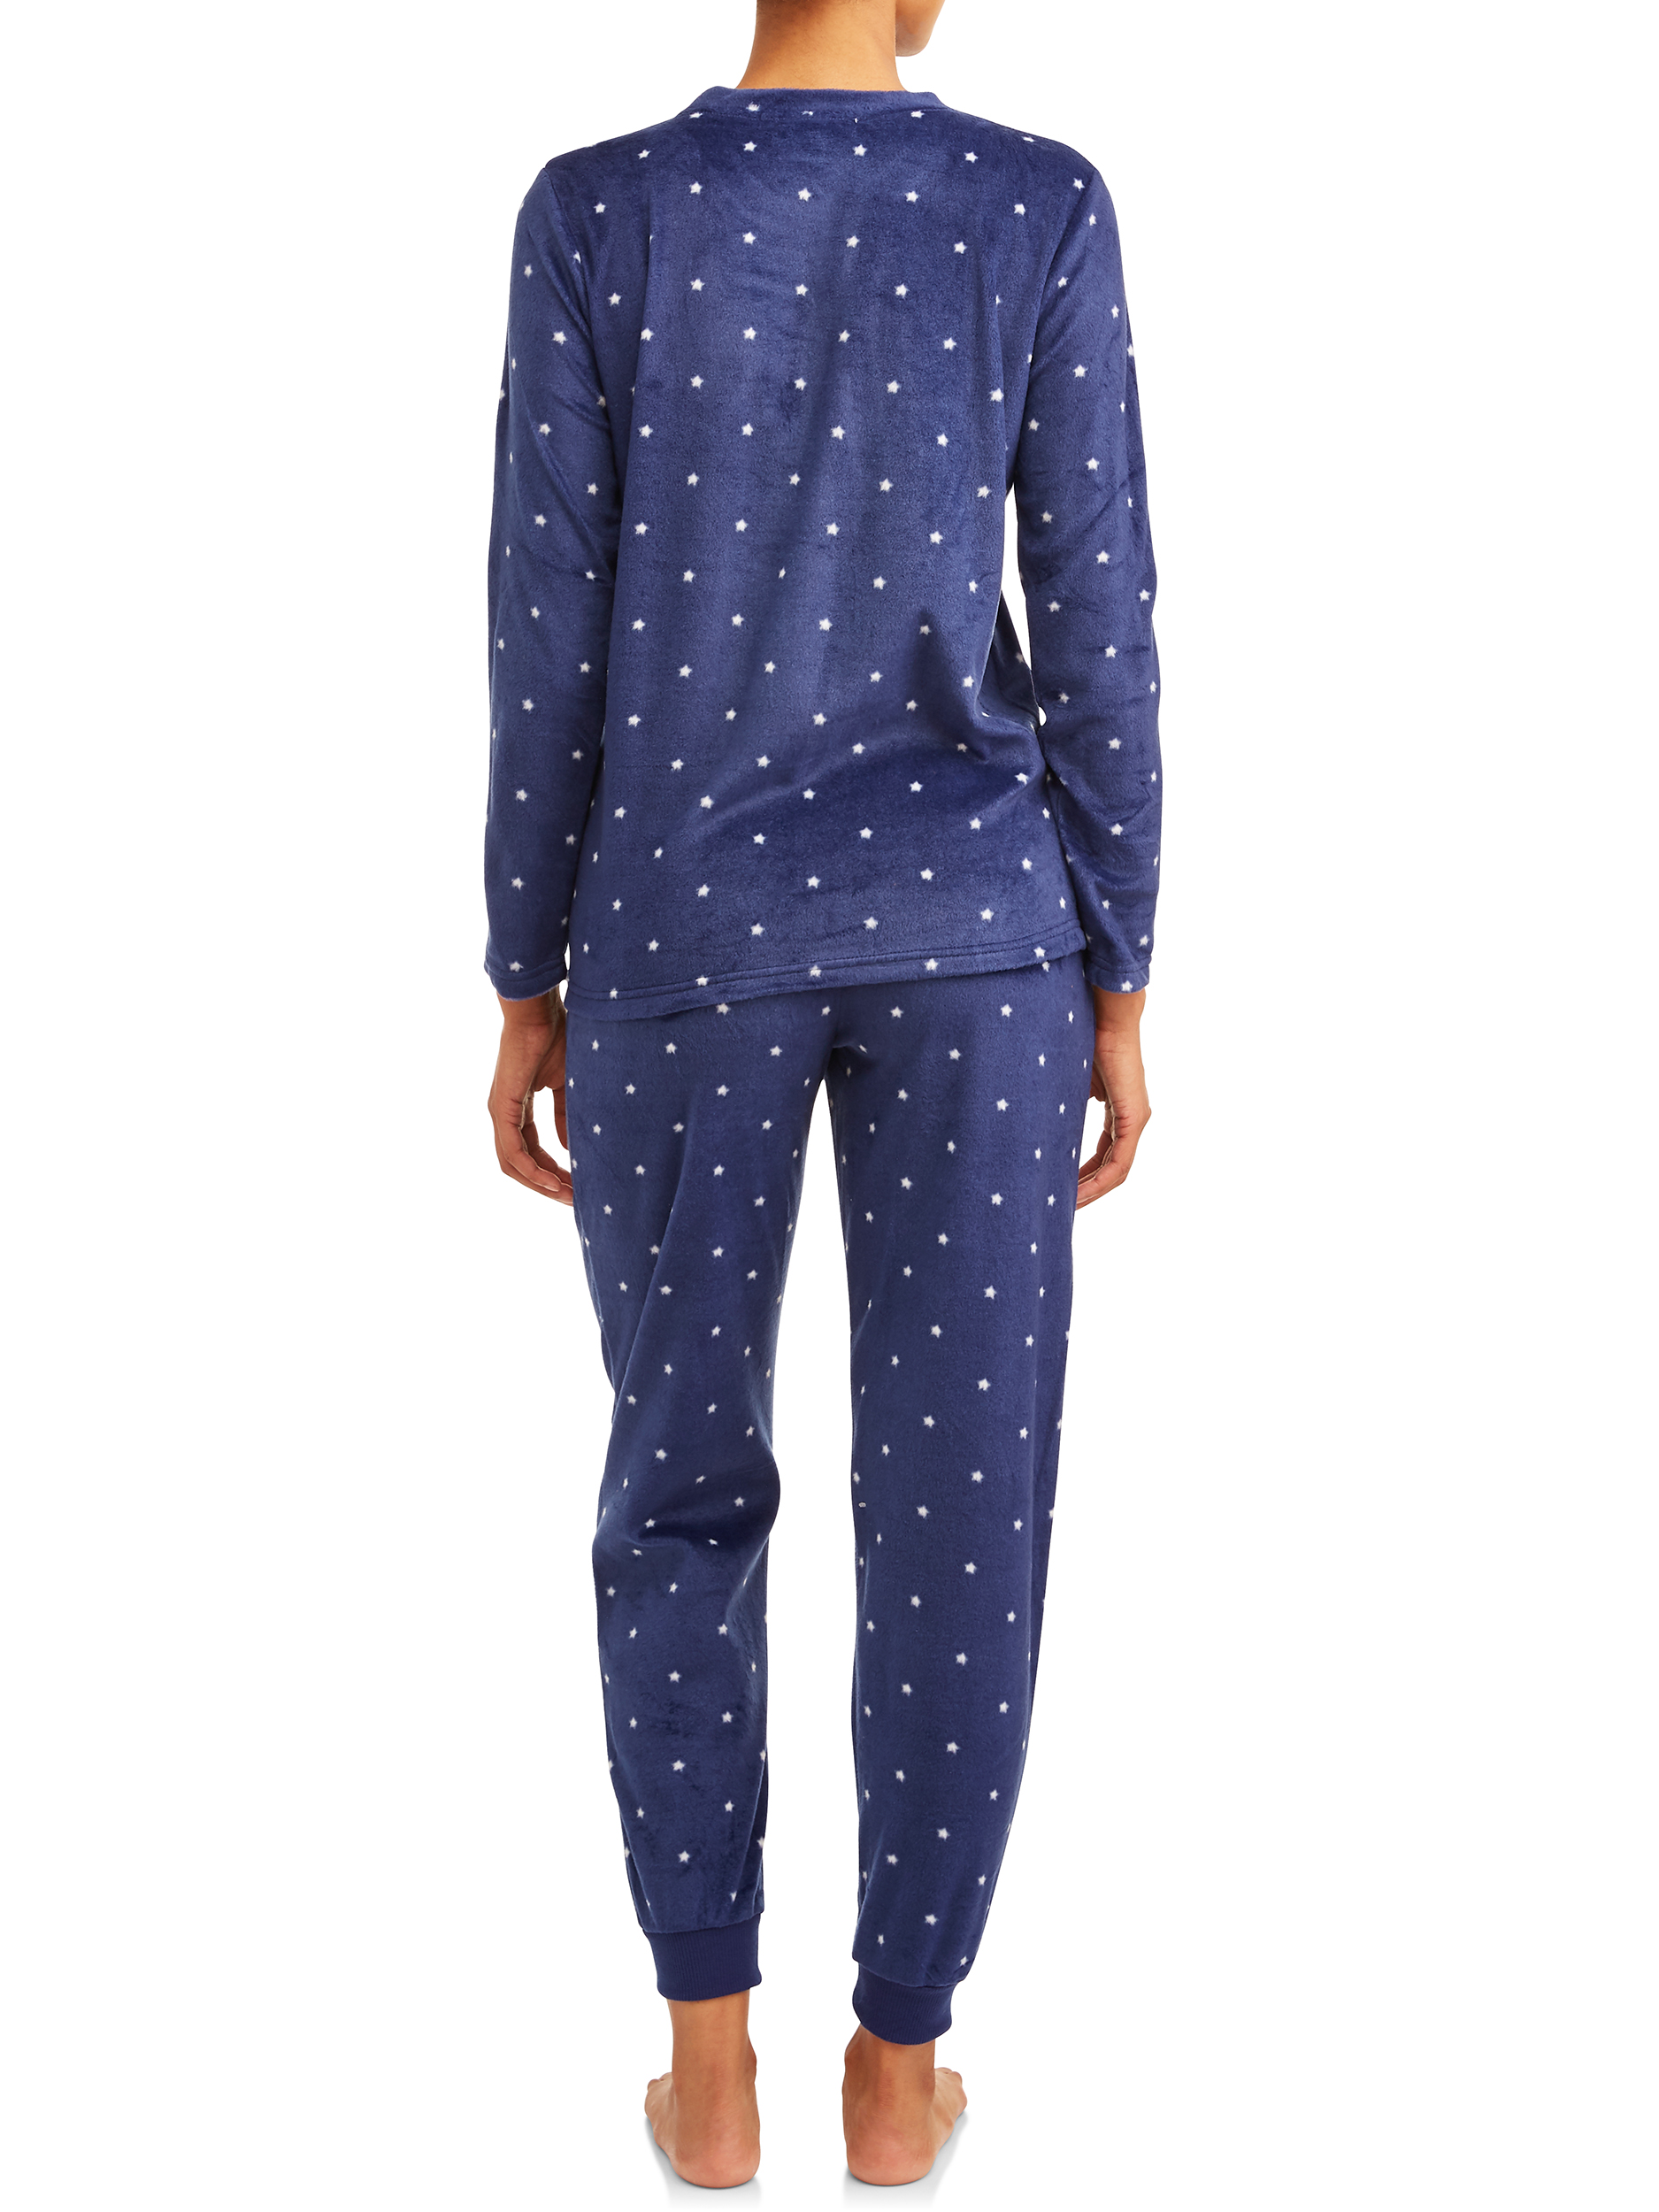 Cozy Critter Women's Super Plush Applique Character Pajama Set - image 2 of 3